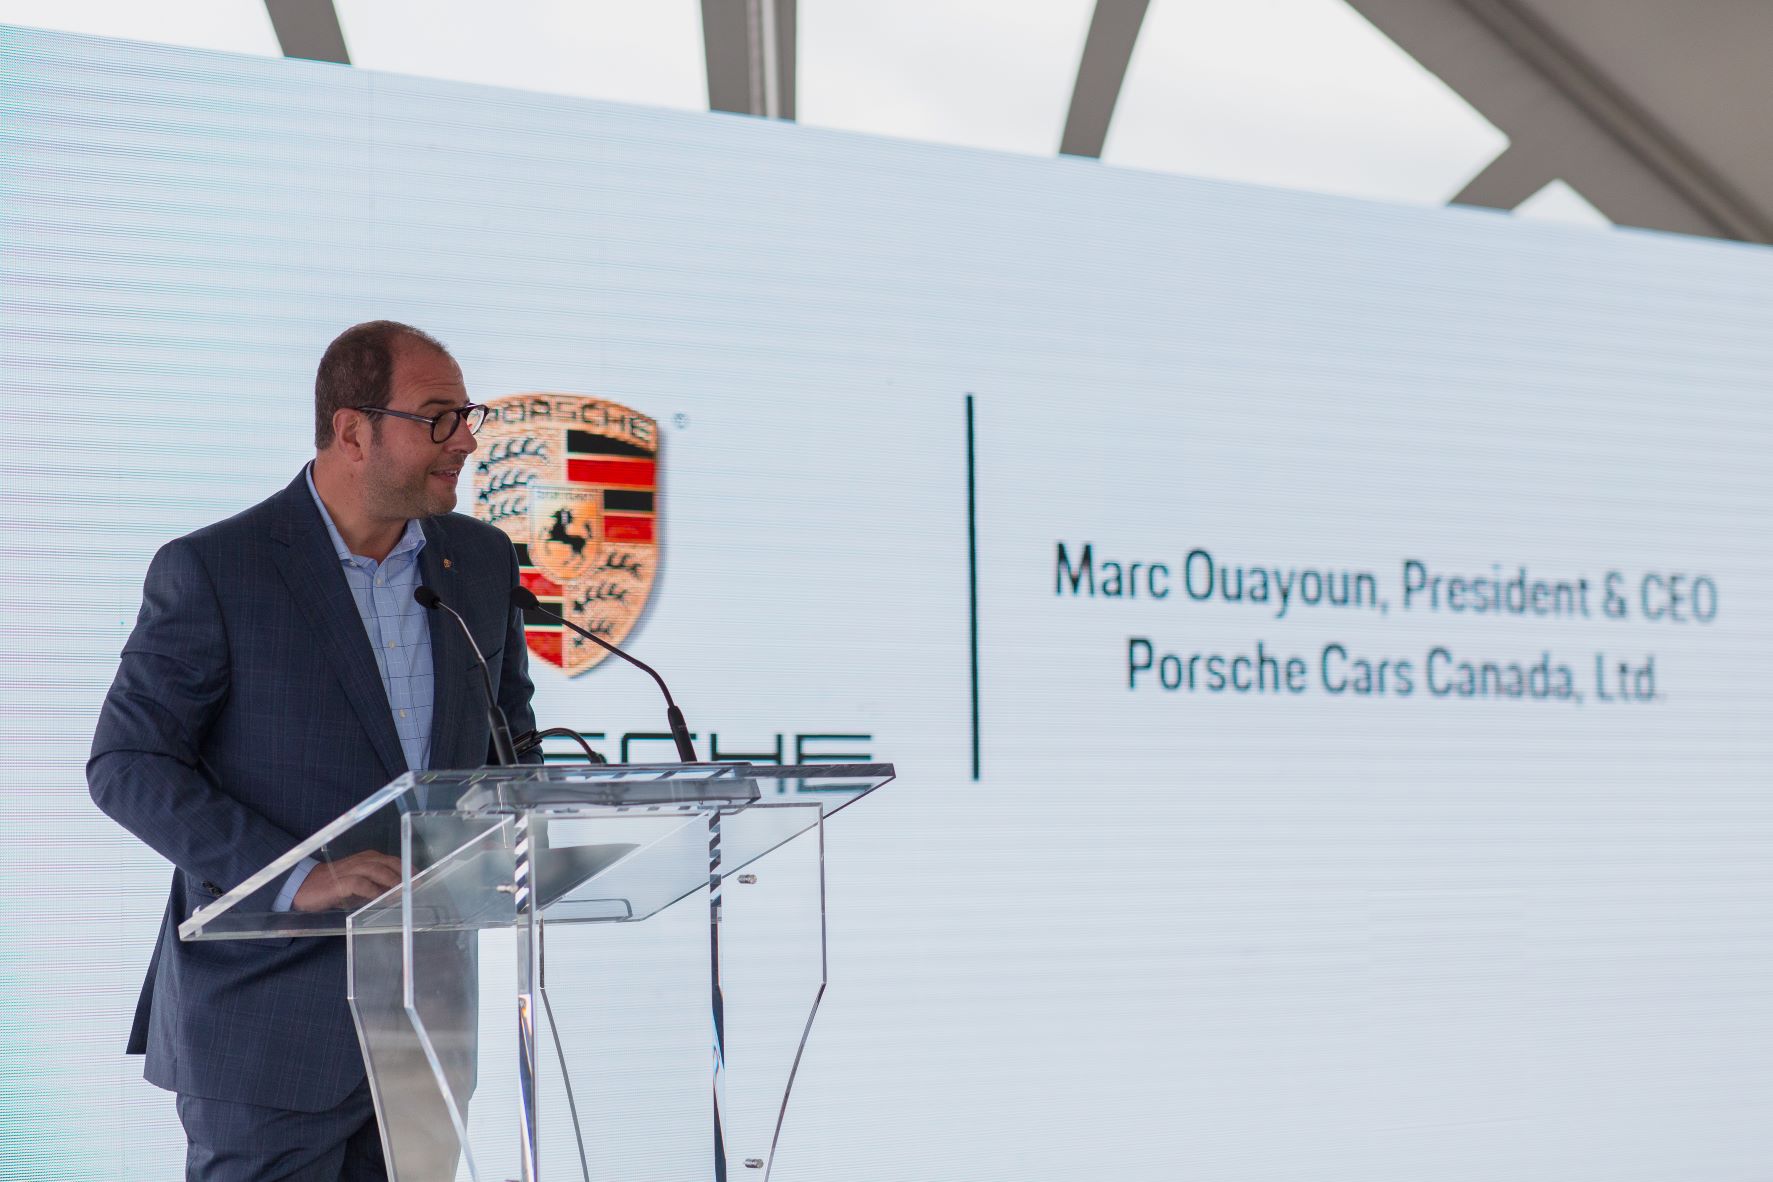 Marc Ouayoun, President and CEO, Porsche Cars Canada, Ltd.